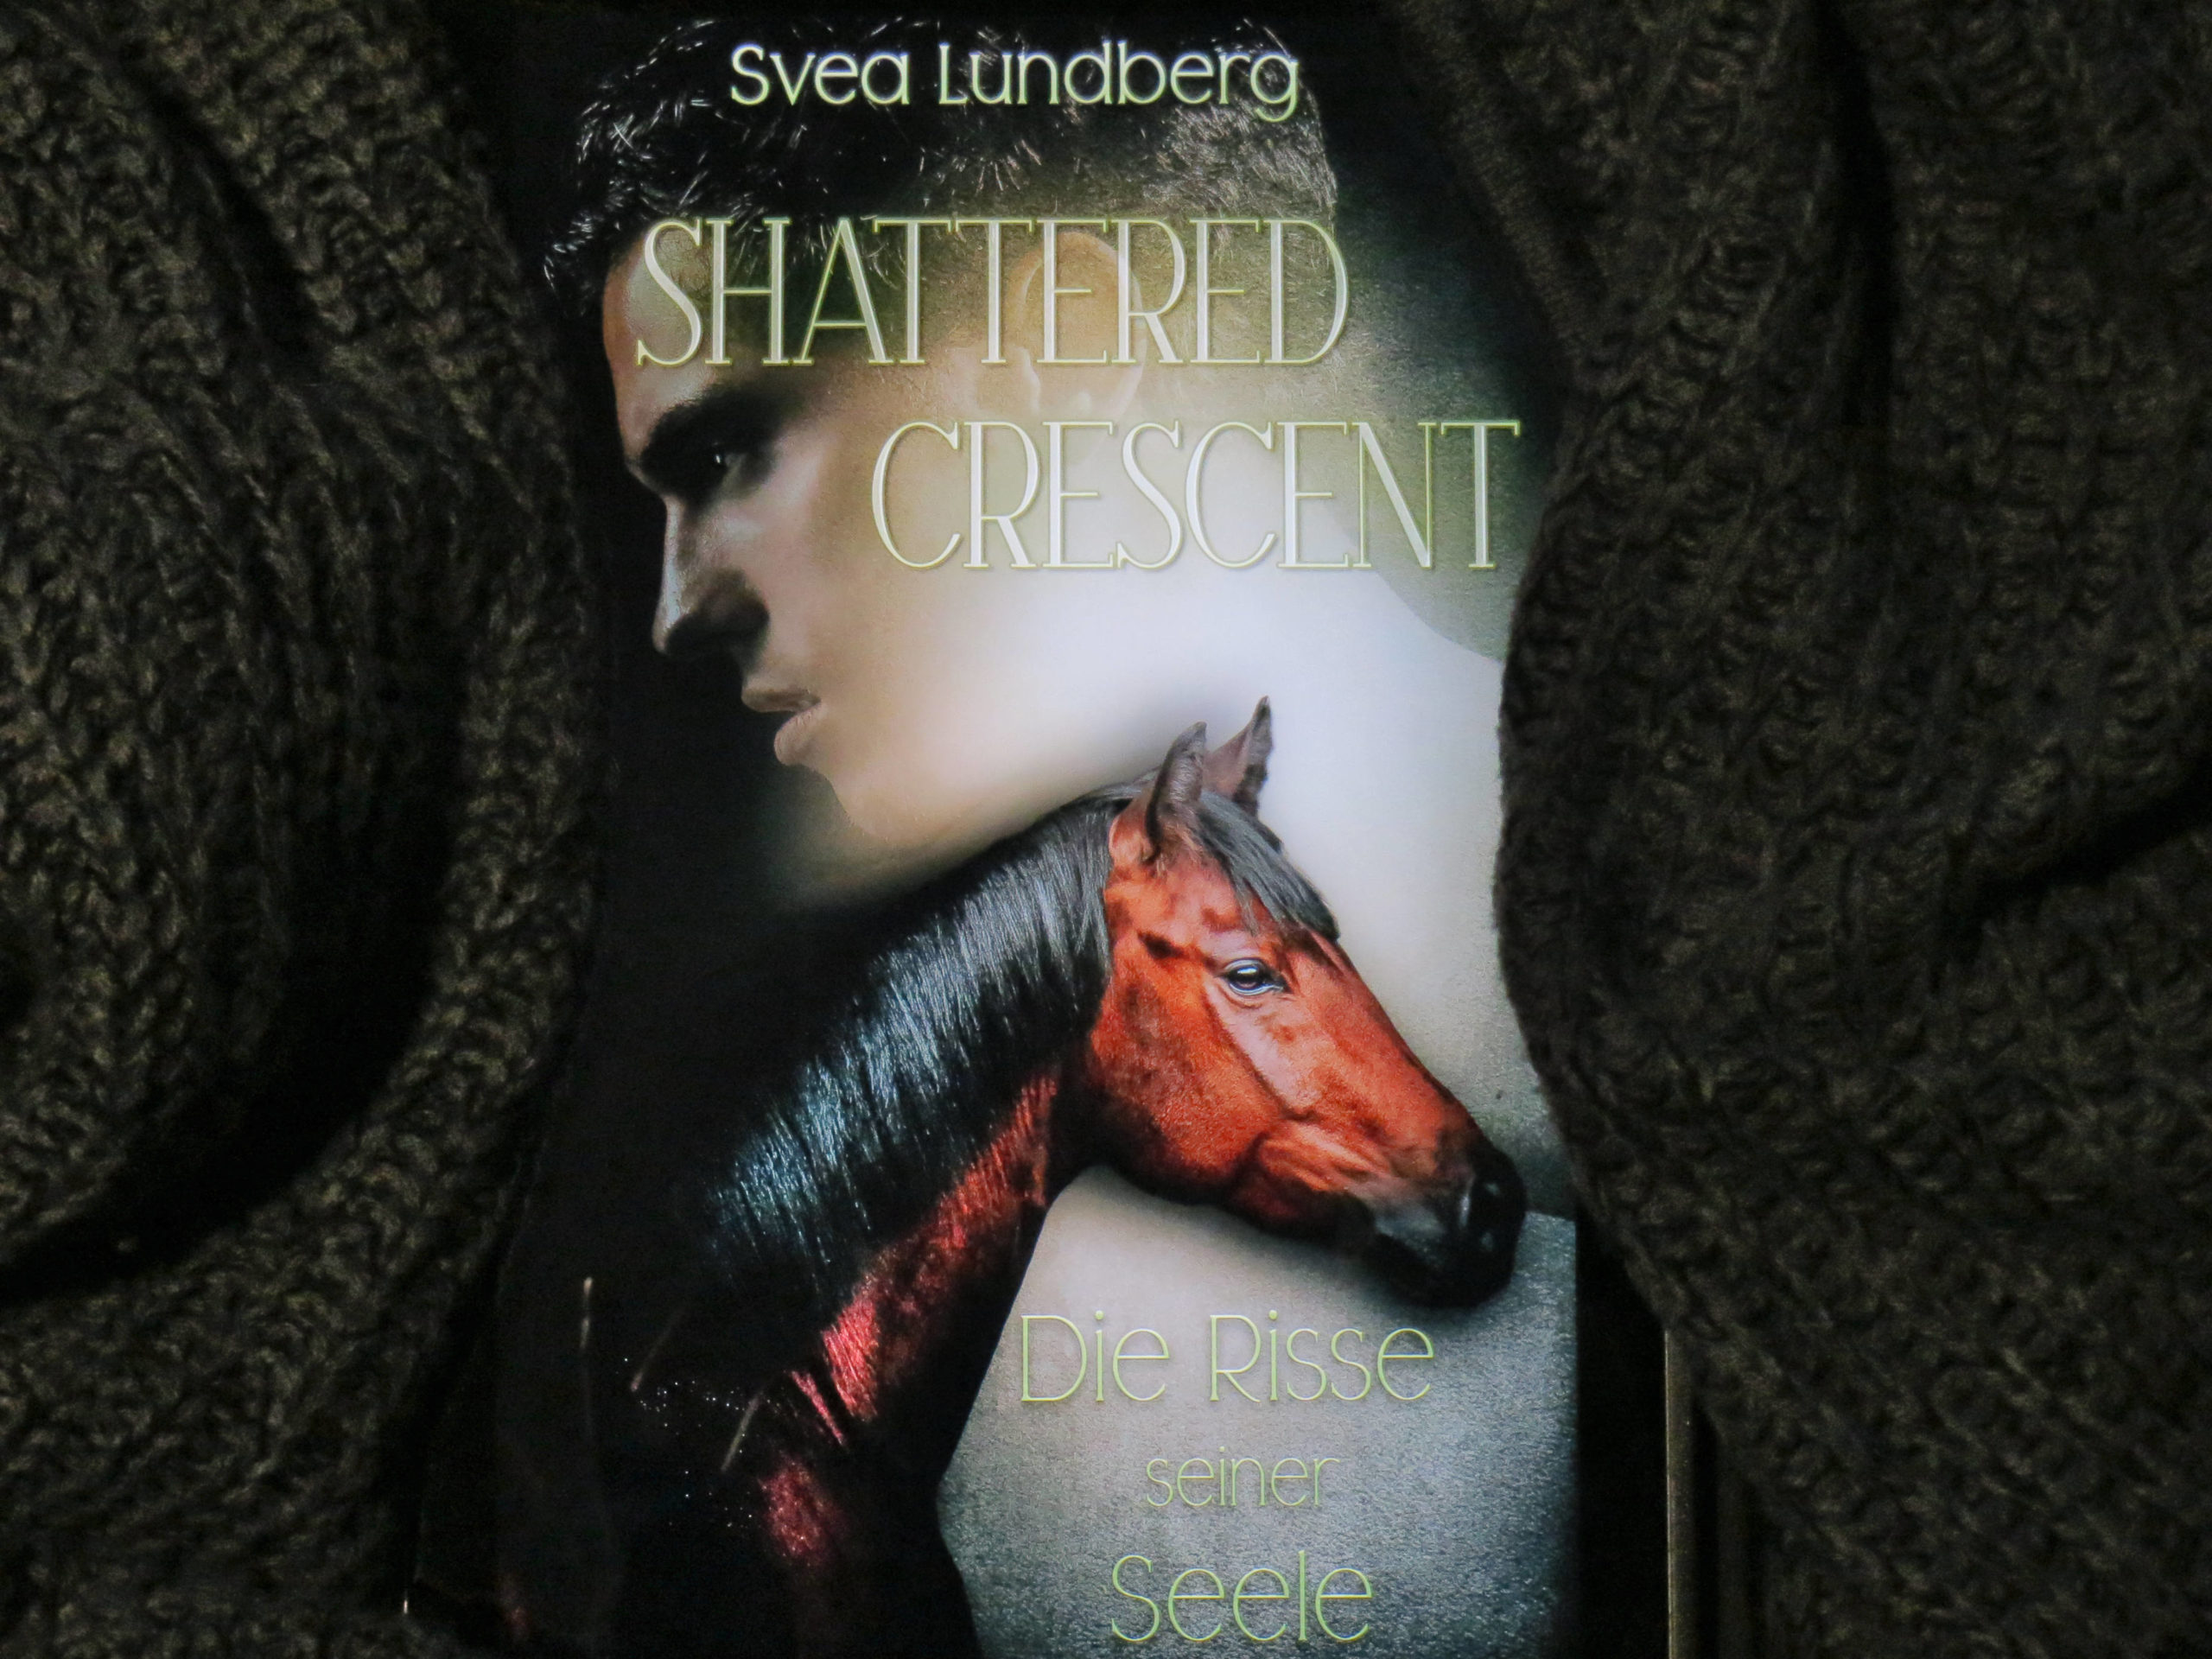 E-Book-Cover: "Shattered Crescent: Die Risse seiner Seele" von Svea Lundberg